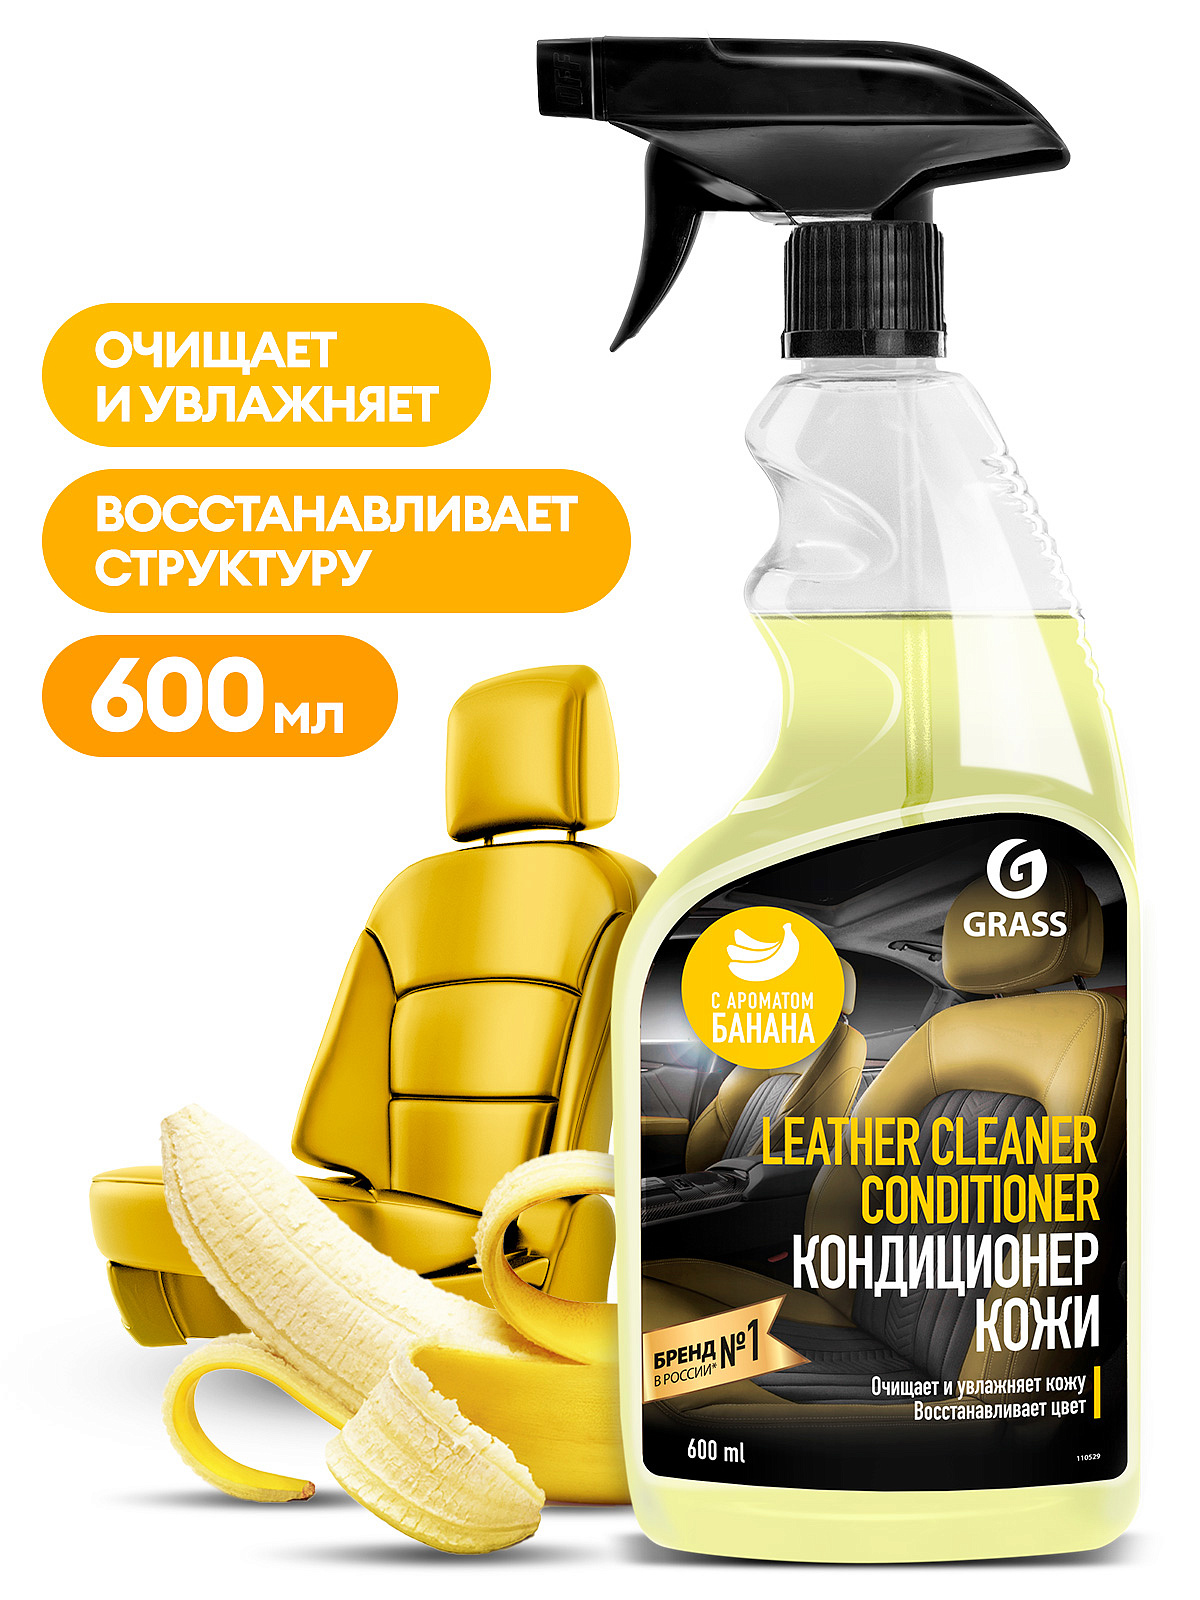 Очиститель-кондиционер кожи "Leather Cleaner Conditioner" Банан (флакон 600 мл)